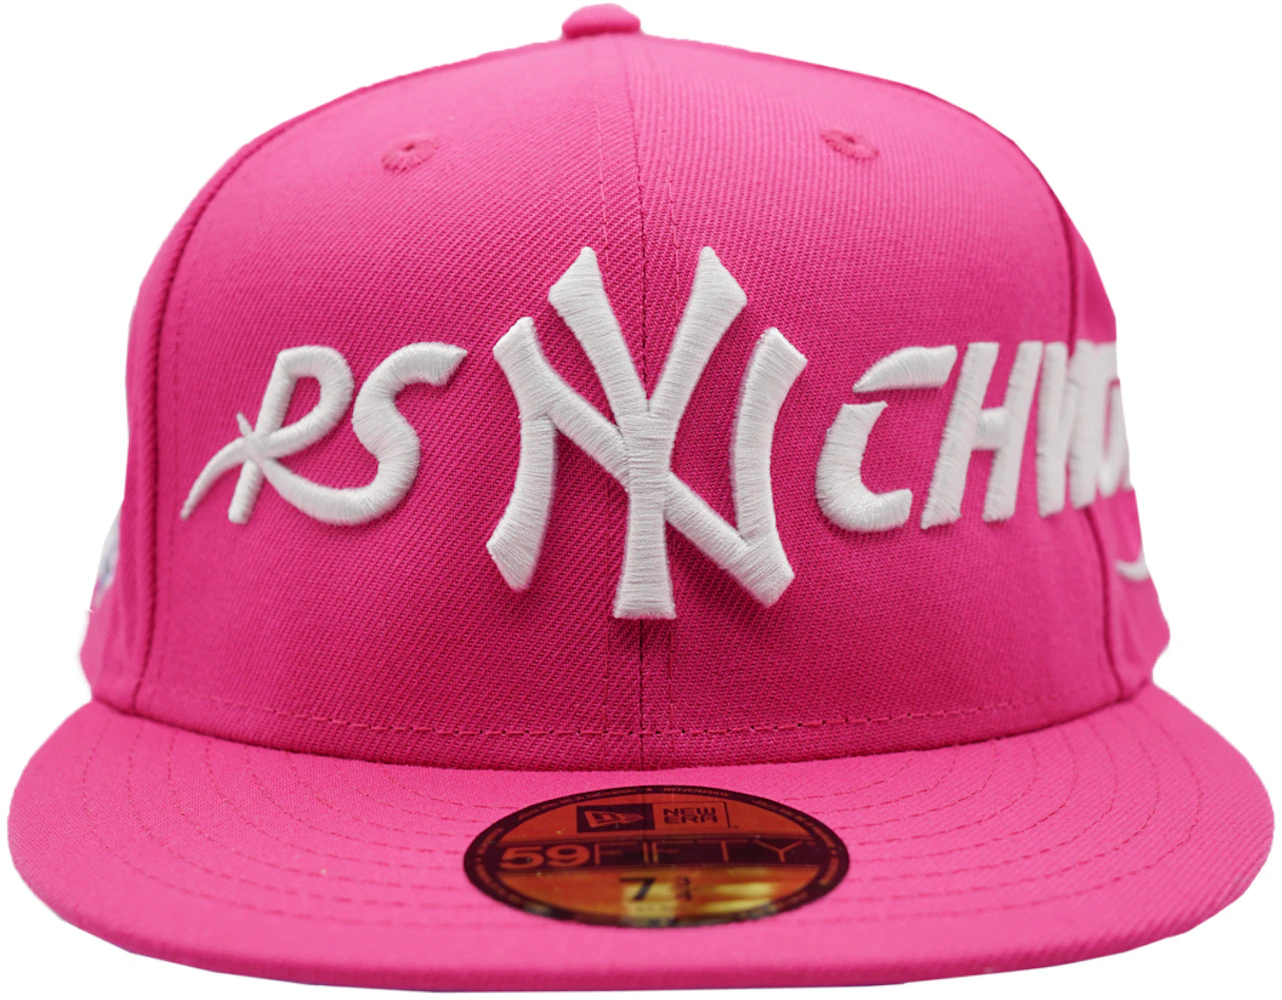 New Era Men's Hat - Pink